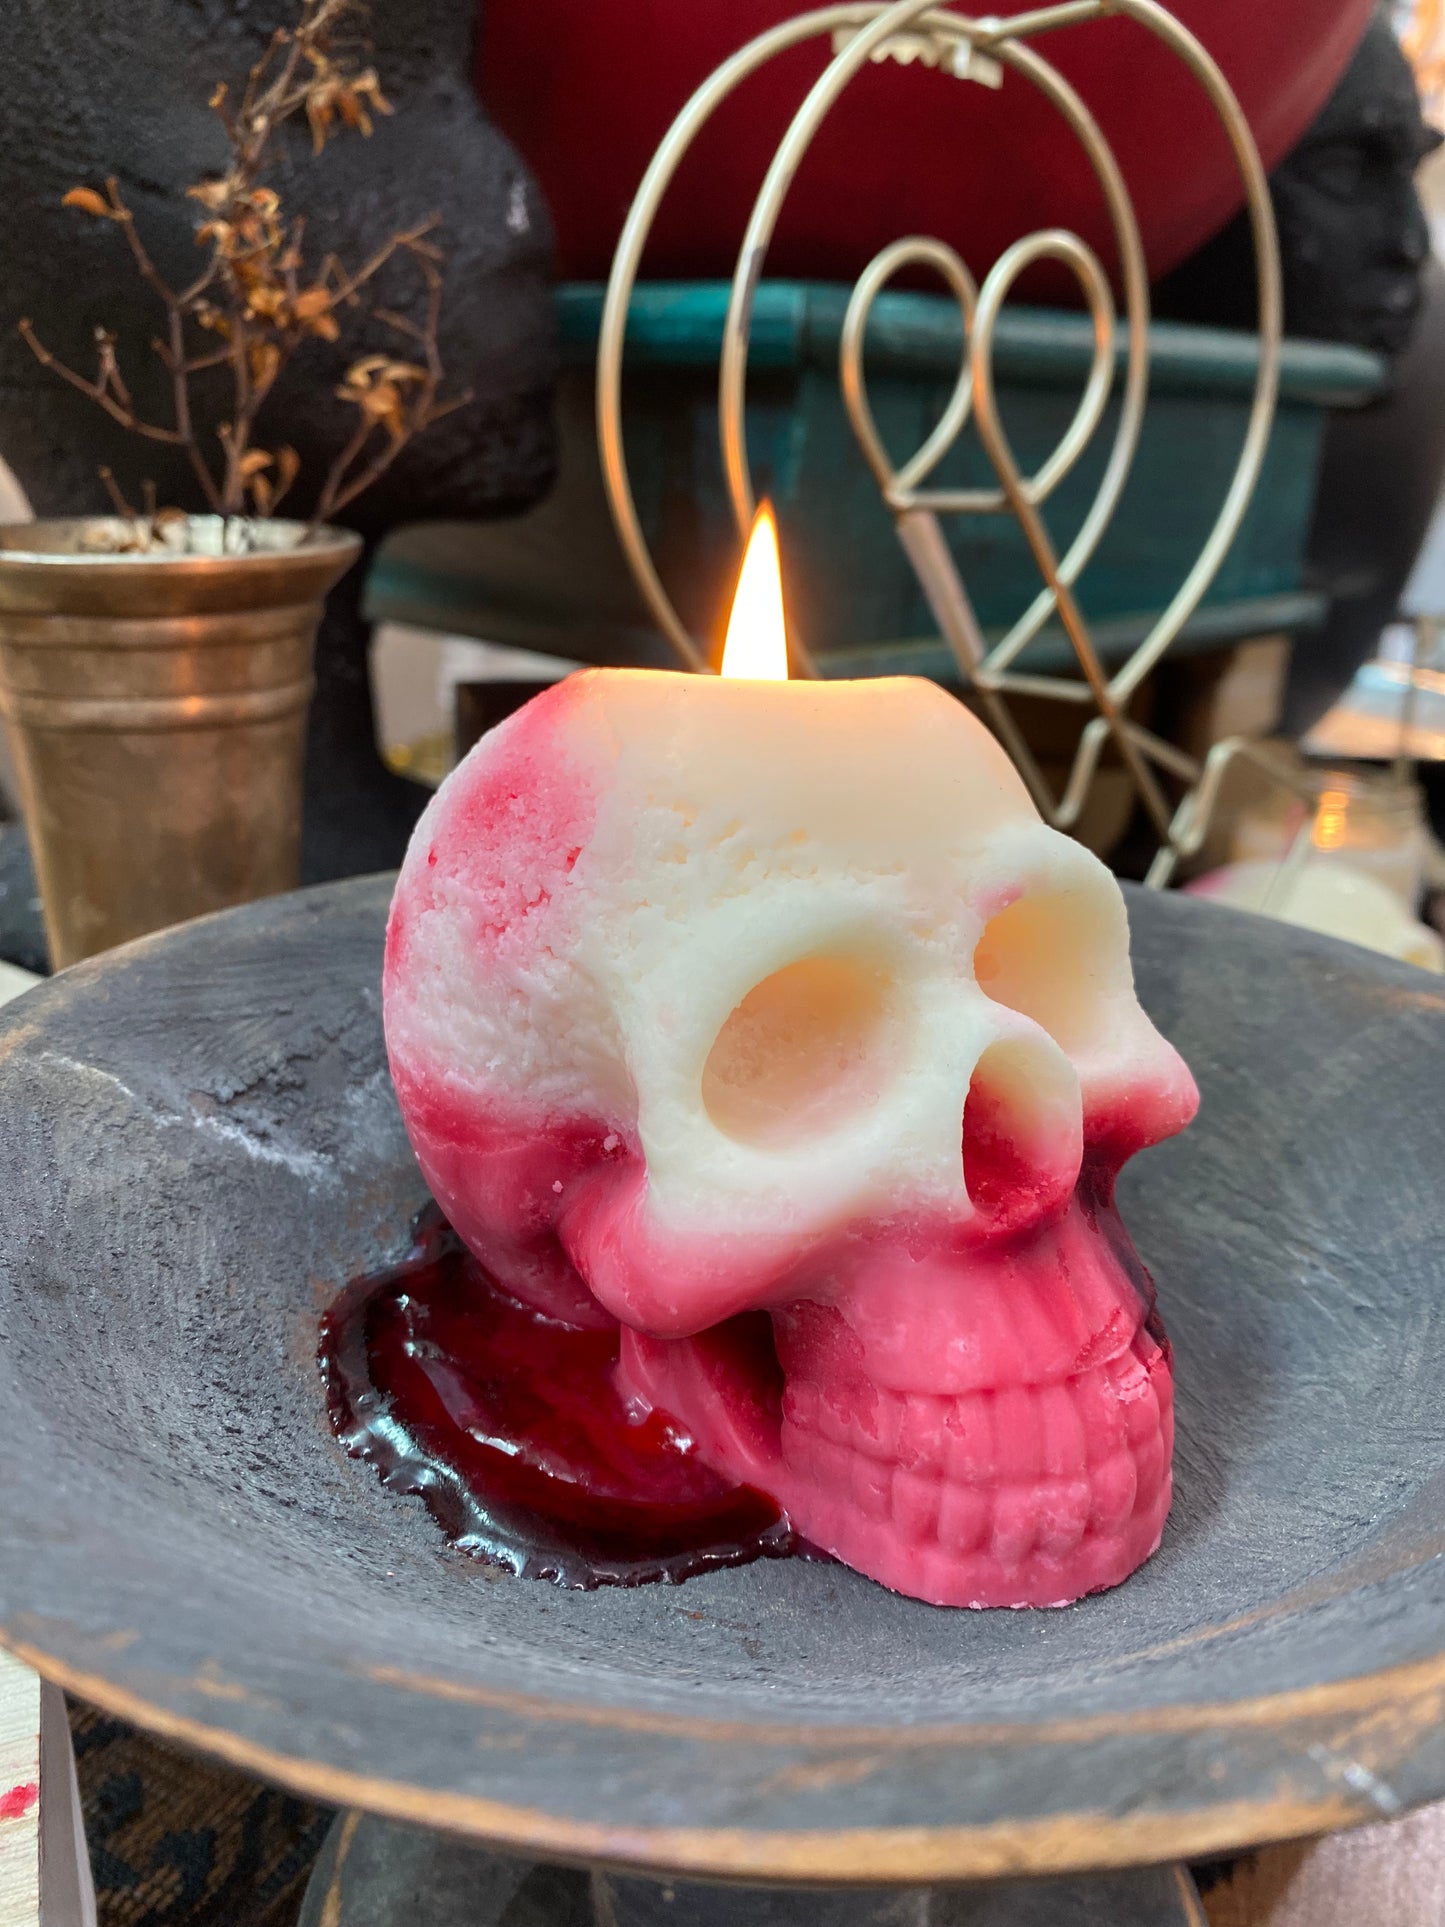 Bleeding Skull Candle